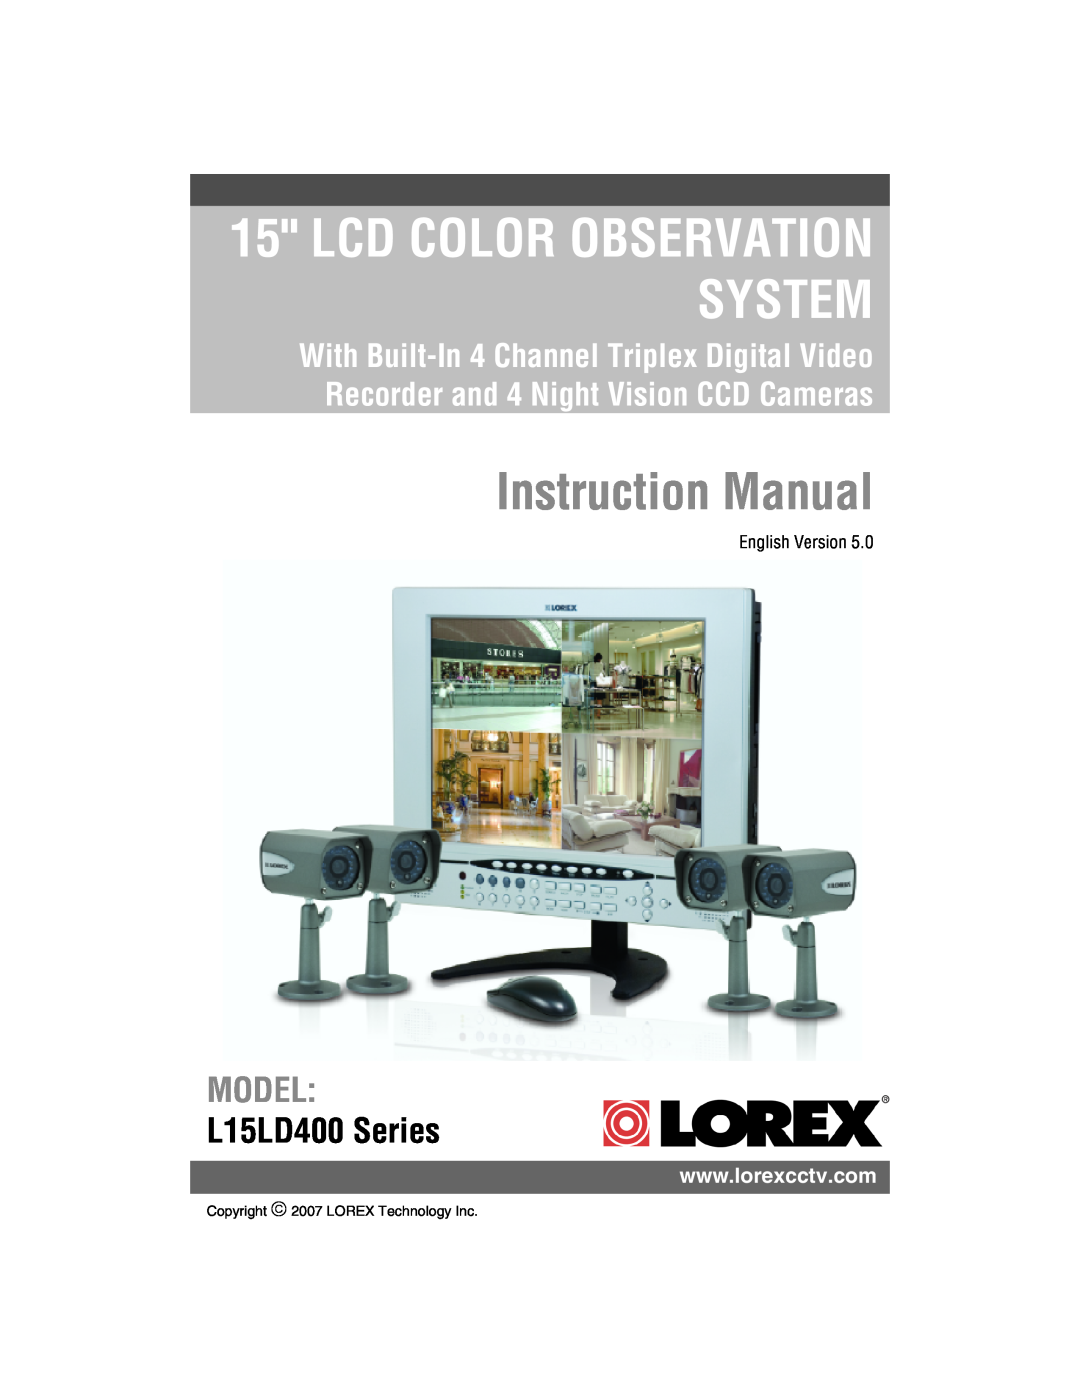 LOREX Technology L15D400 instruction manual L15LD400 Series, Lcd Color Observation System, Model 